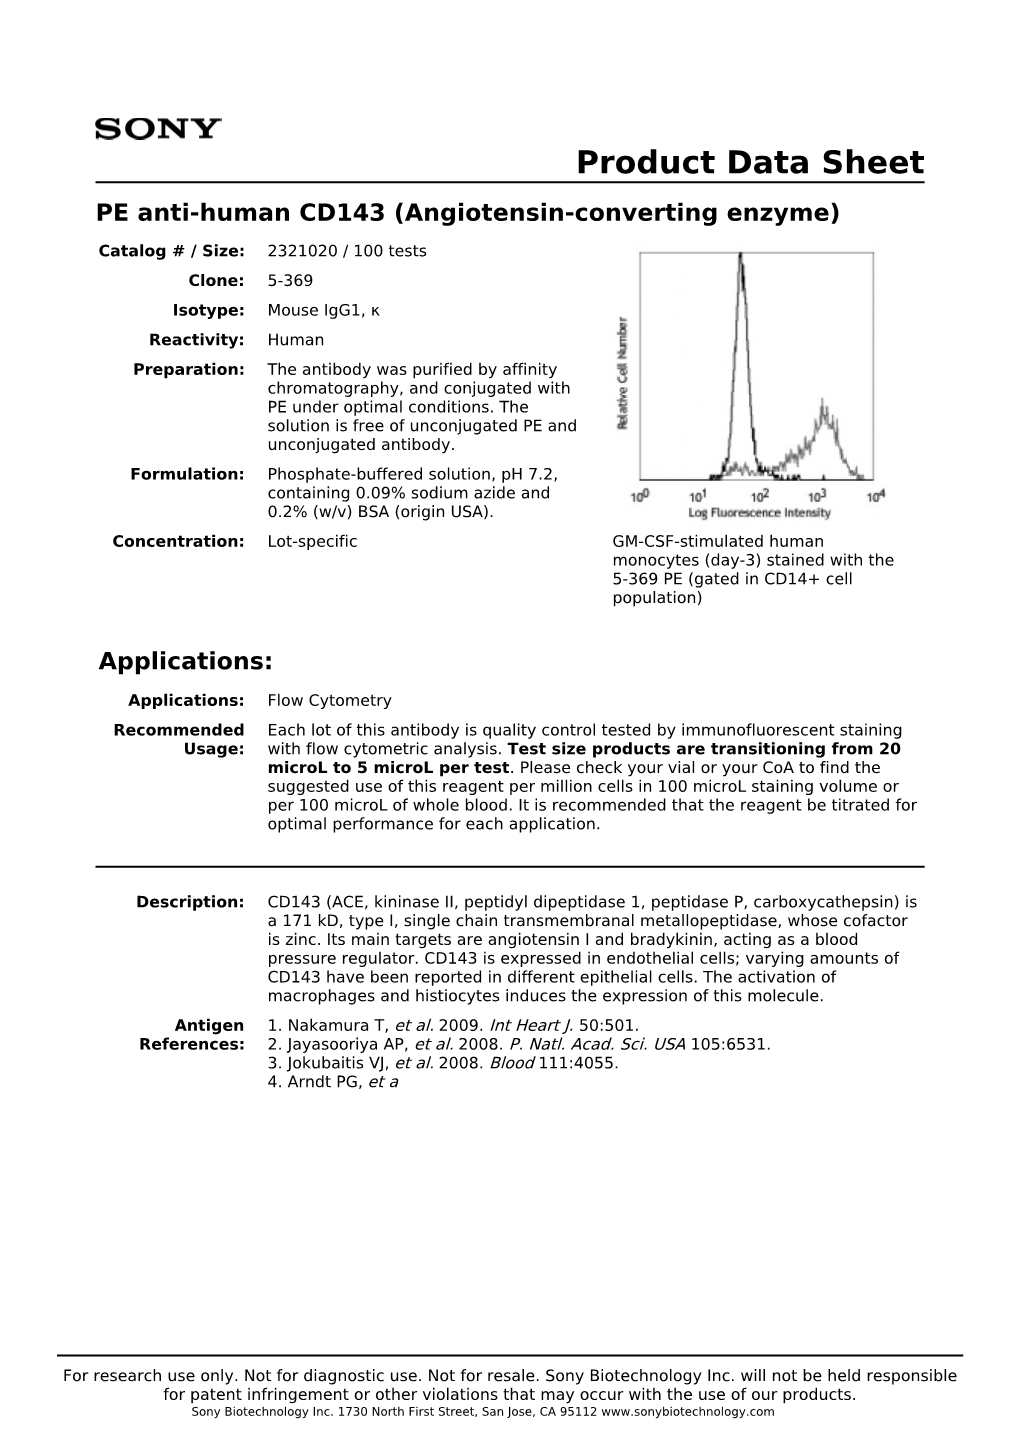 Product Data Sheet PE Anti-Human CD143 (Angiotensin-Converting Enzyme)